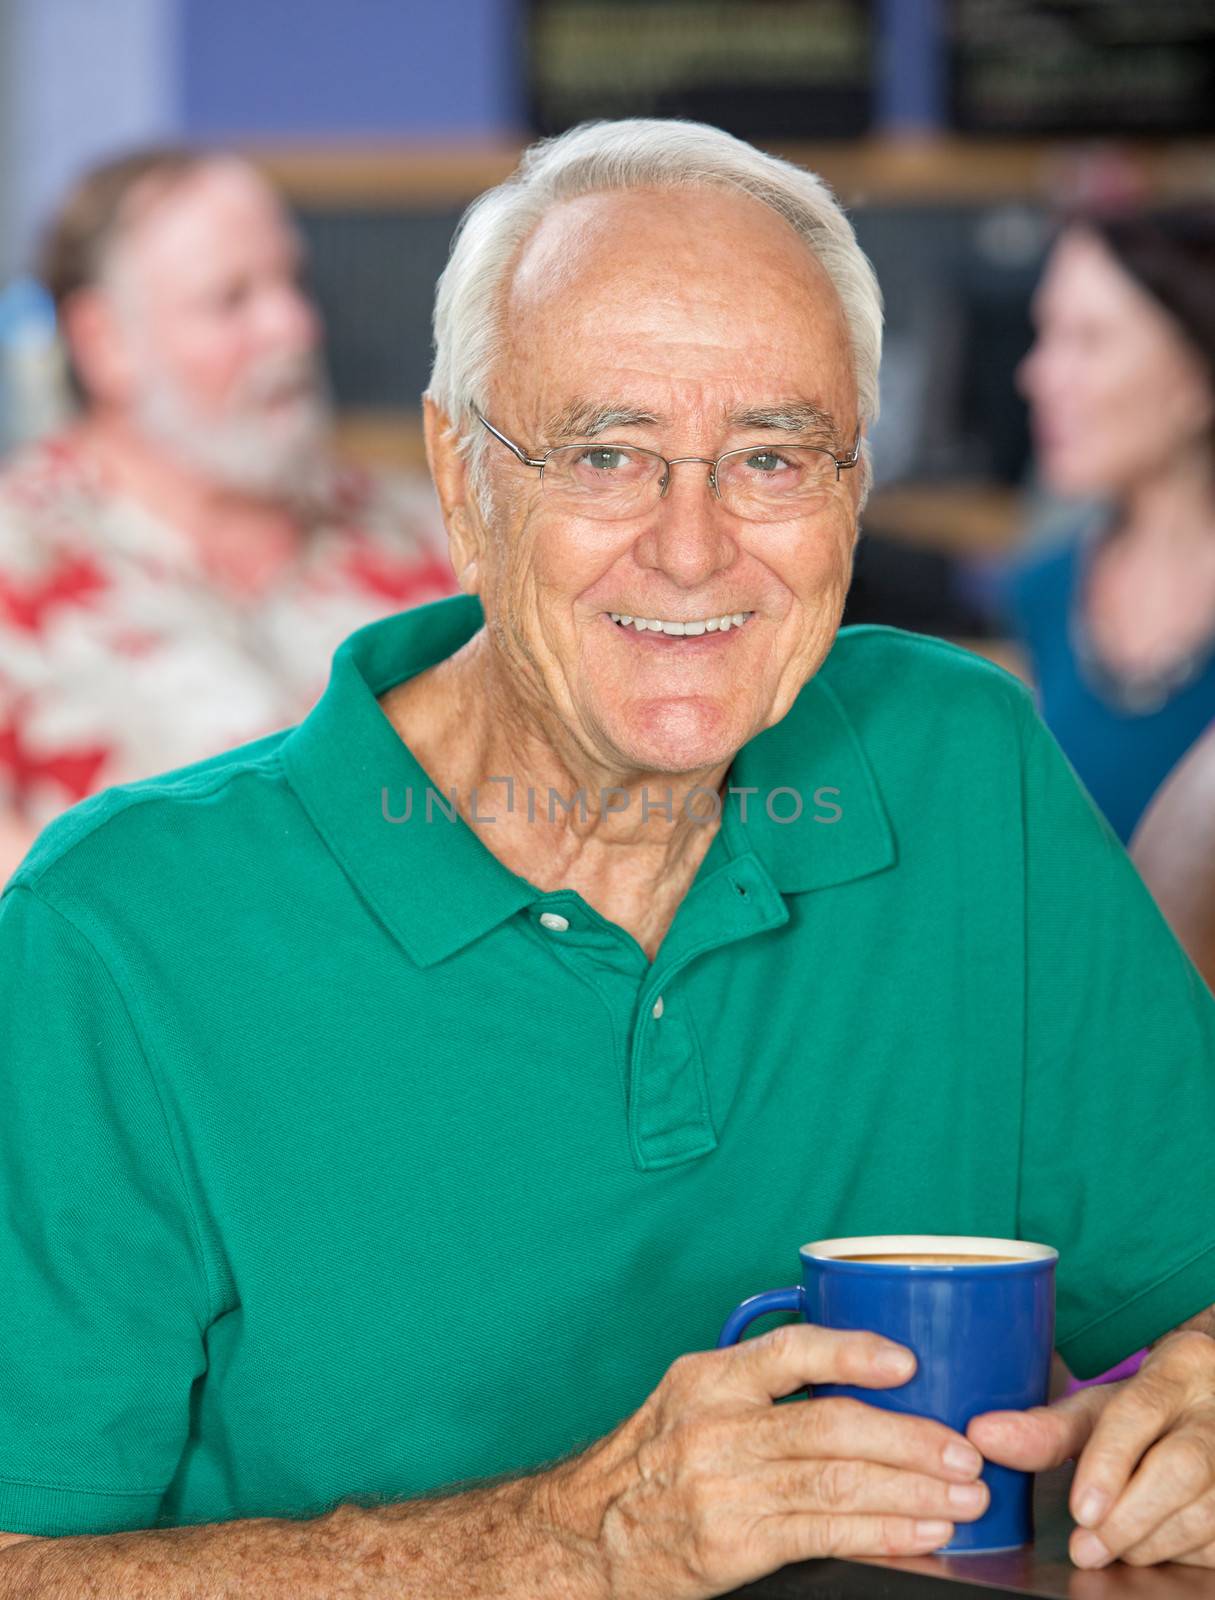 Handsome senior male smiling with coffee mug